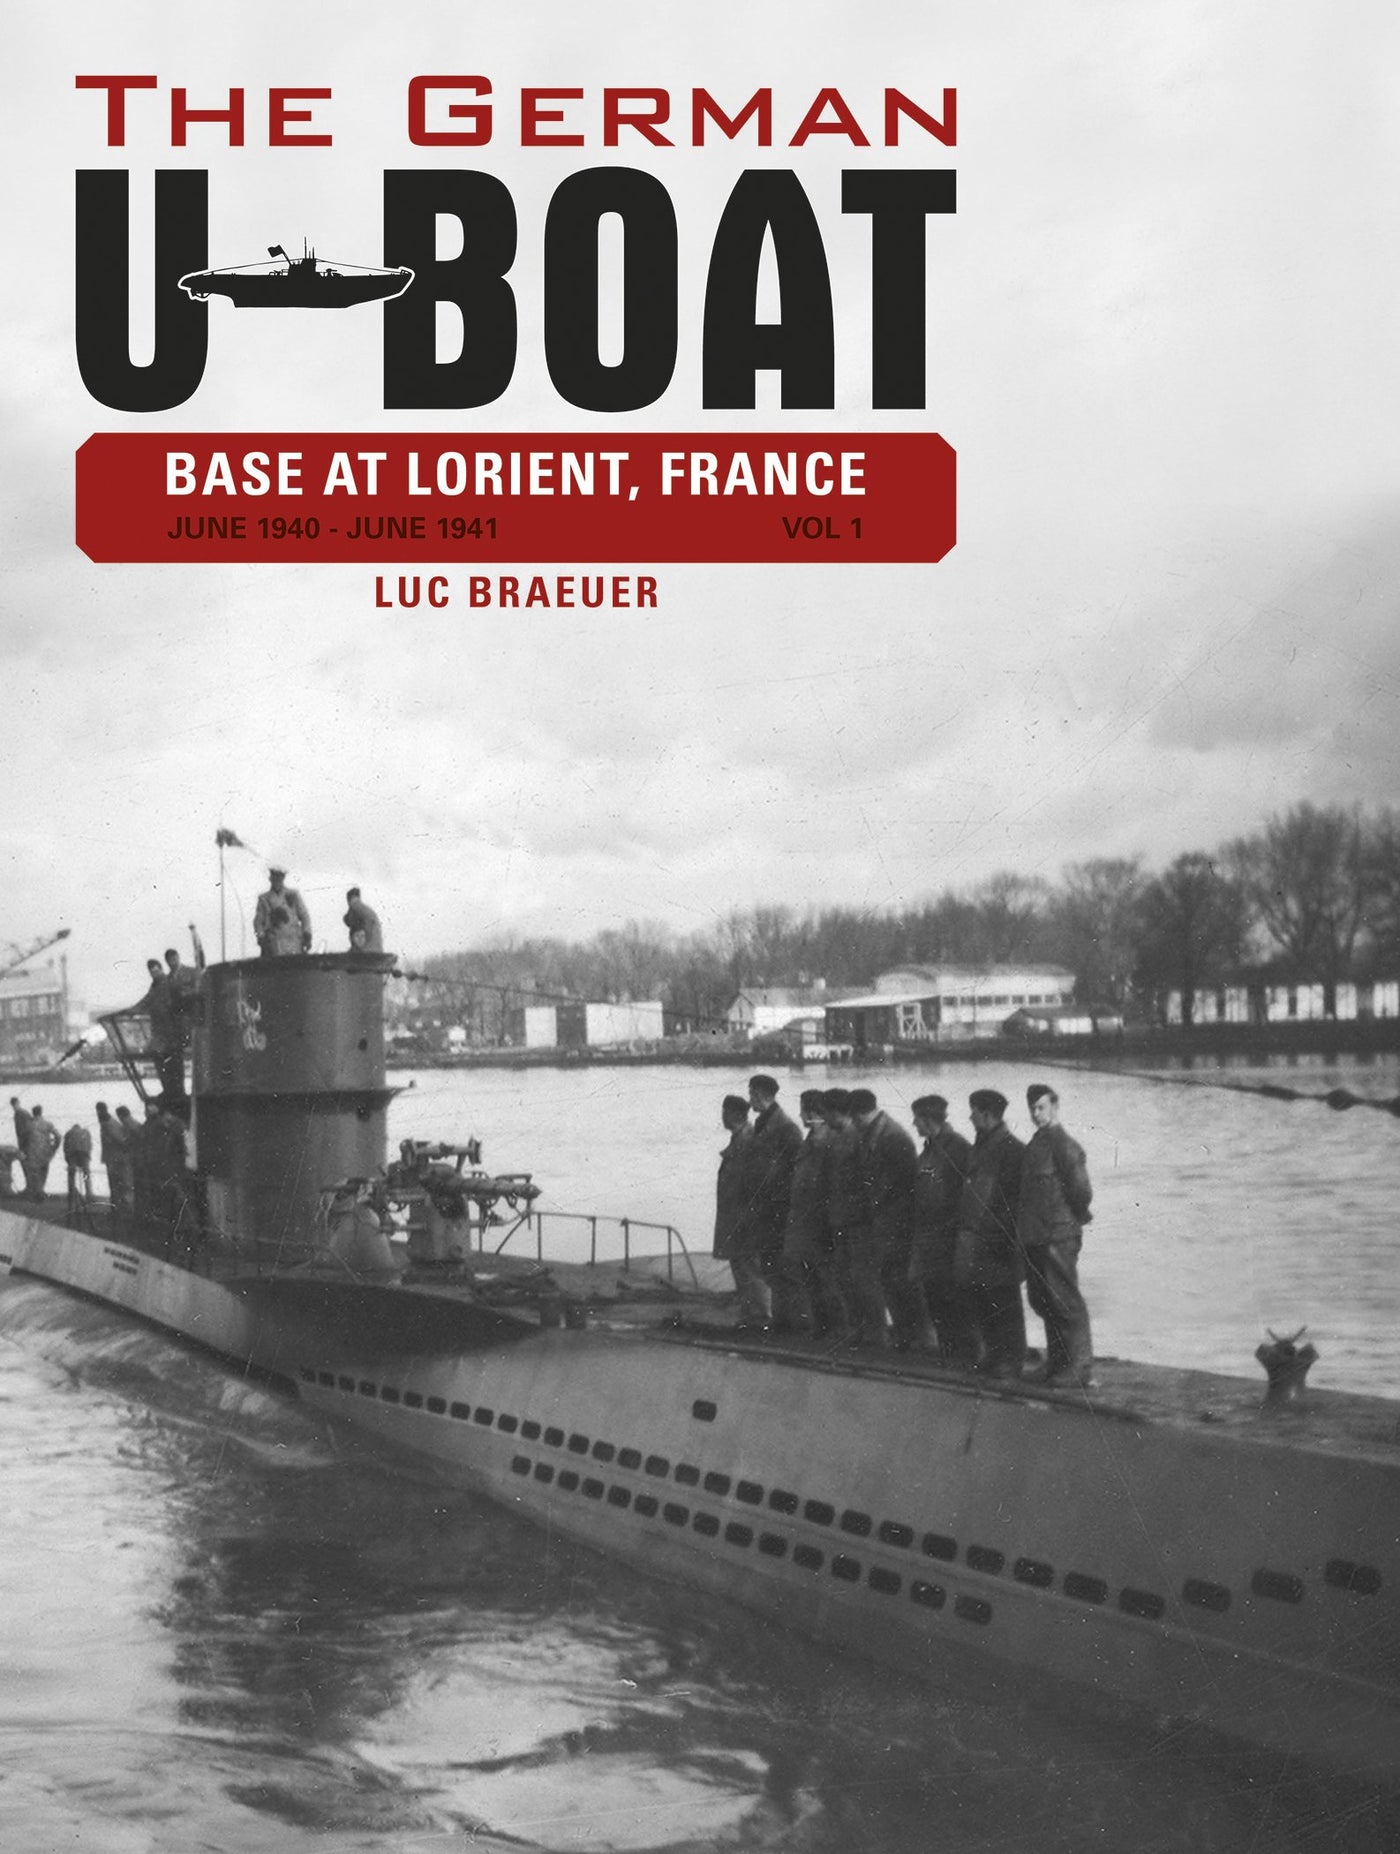 The German U-Boat Base at Lorient France: Vol. 1